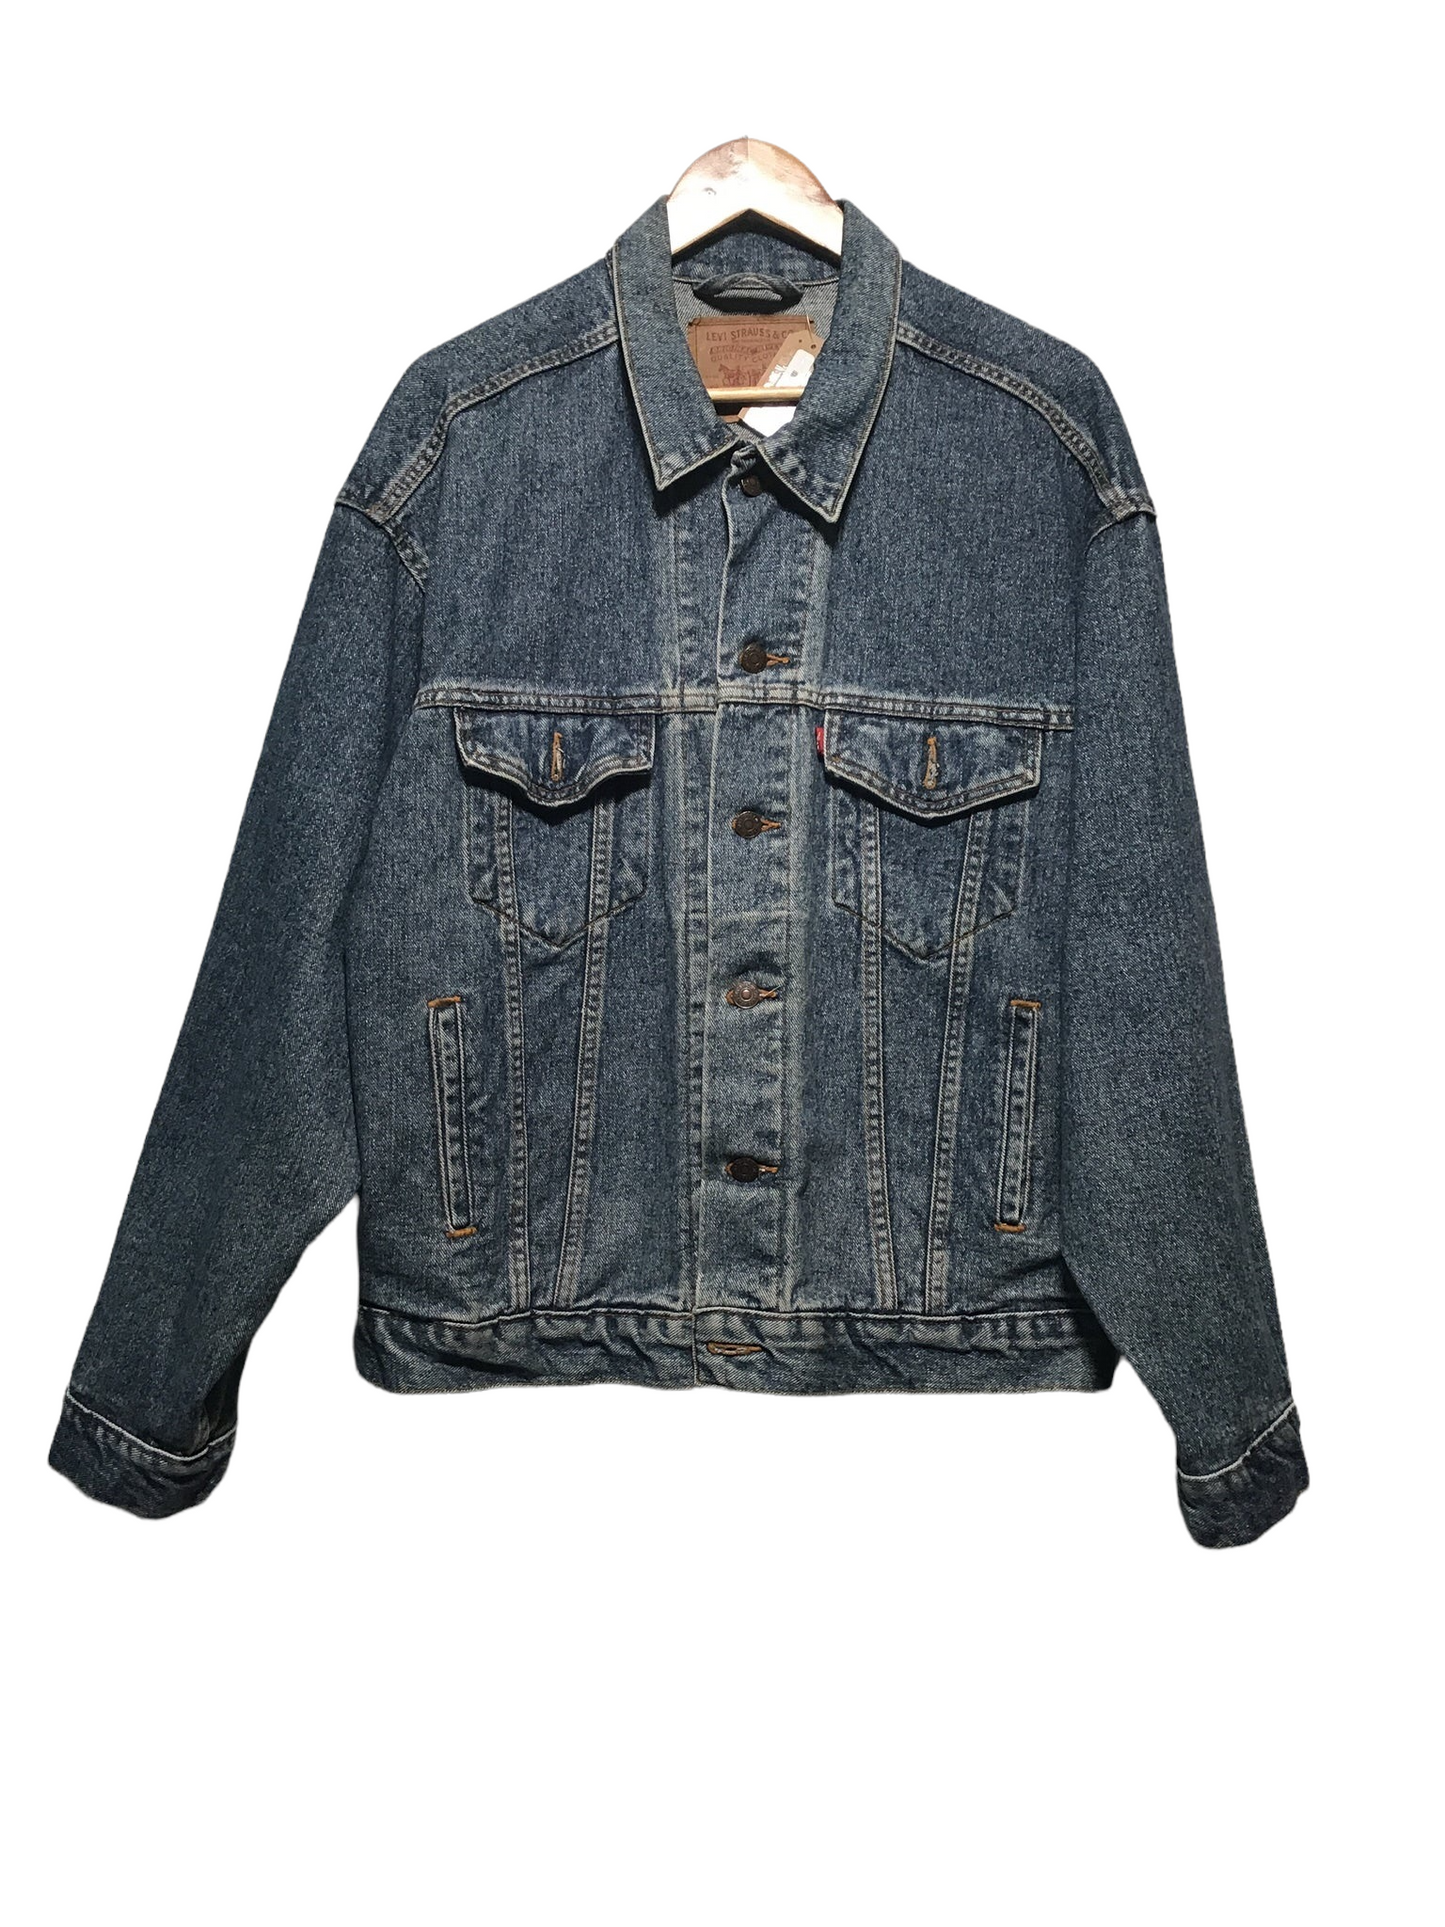 Levi's Denim Jacket (Size L)